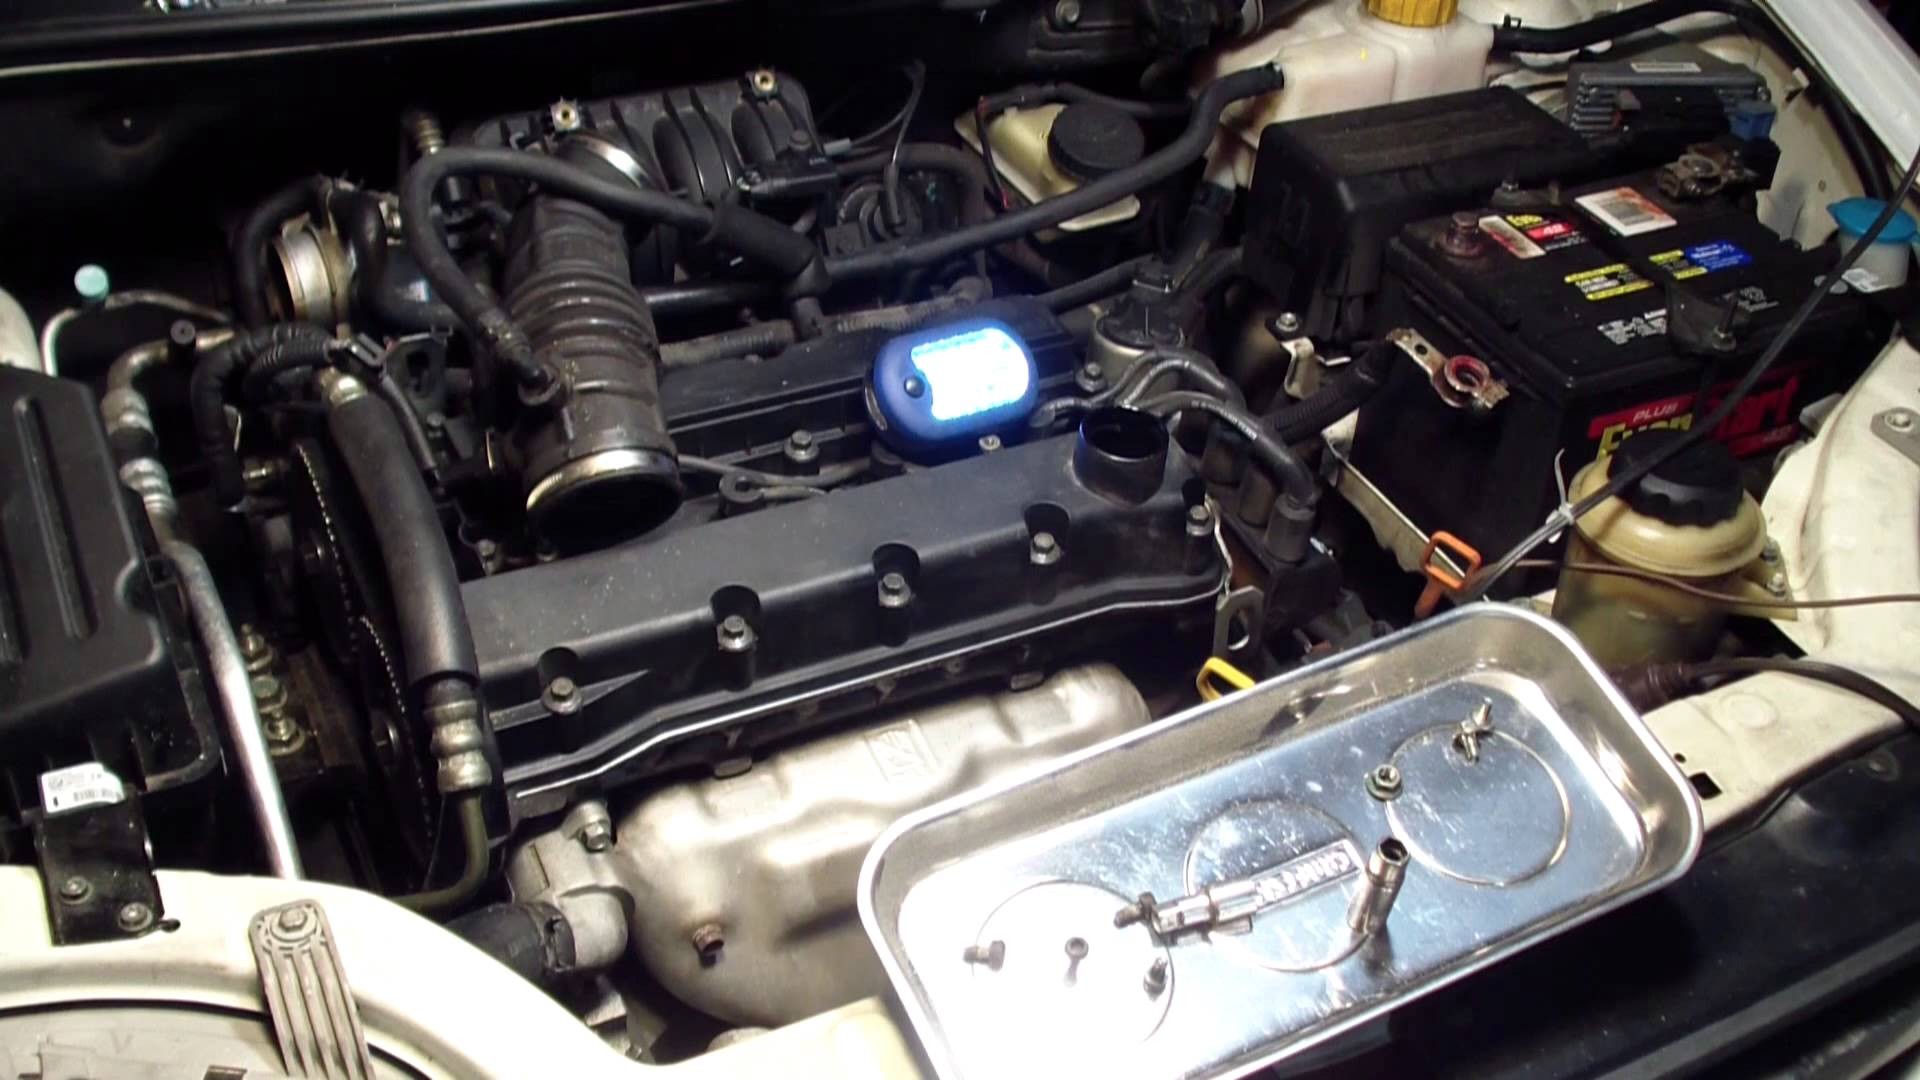 2009 Chevy Aveo Engine Diagram Replace Camshaft Position Sensor 2008 Chevrolet Aveo5 for Obd Ii Of 2009 Chevy Aveo Engine Diagram